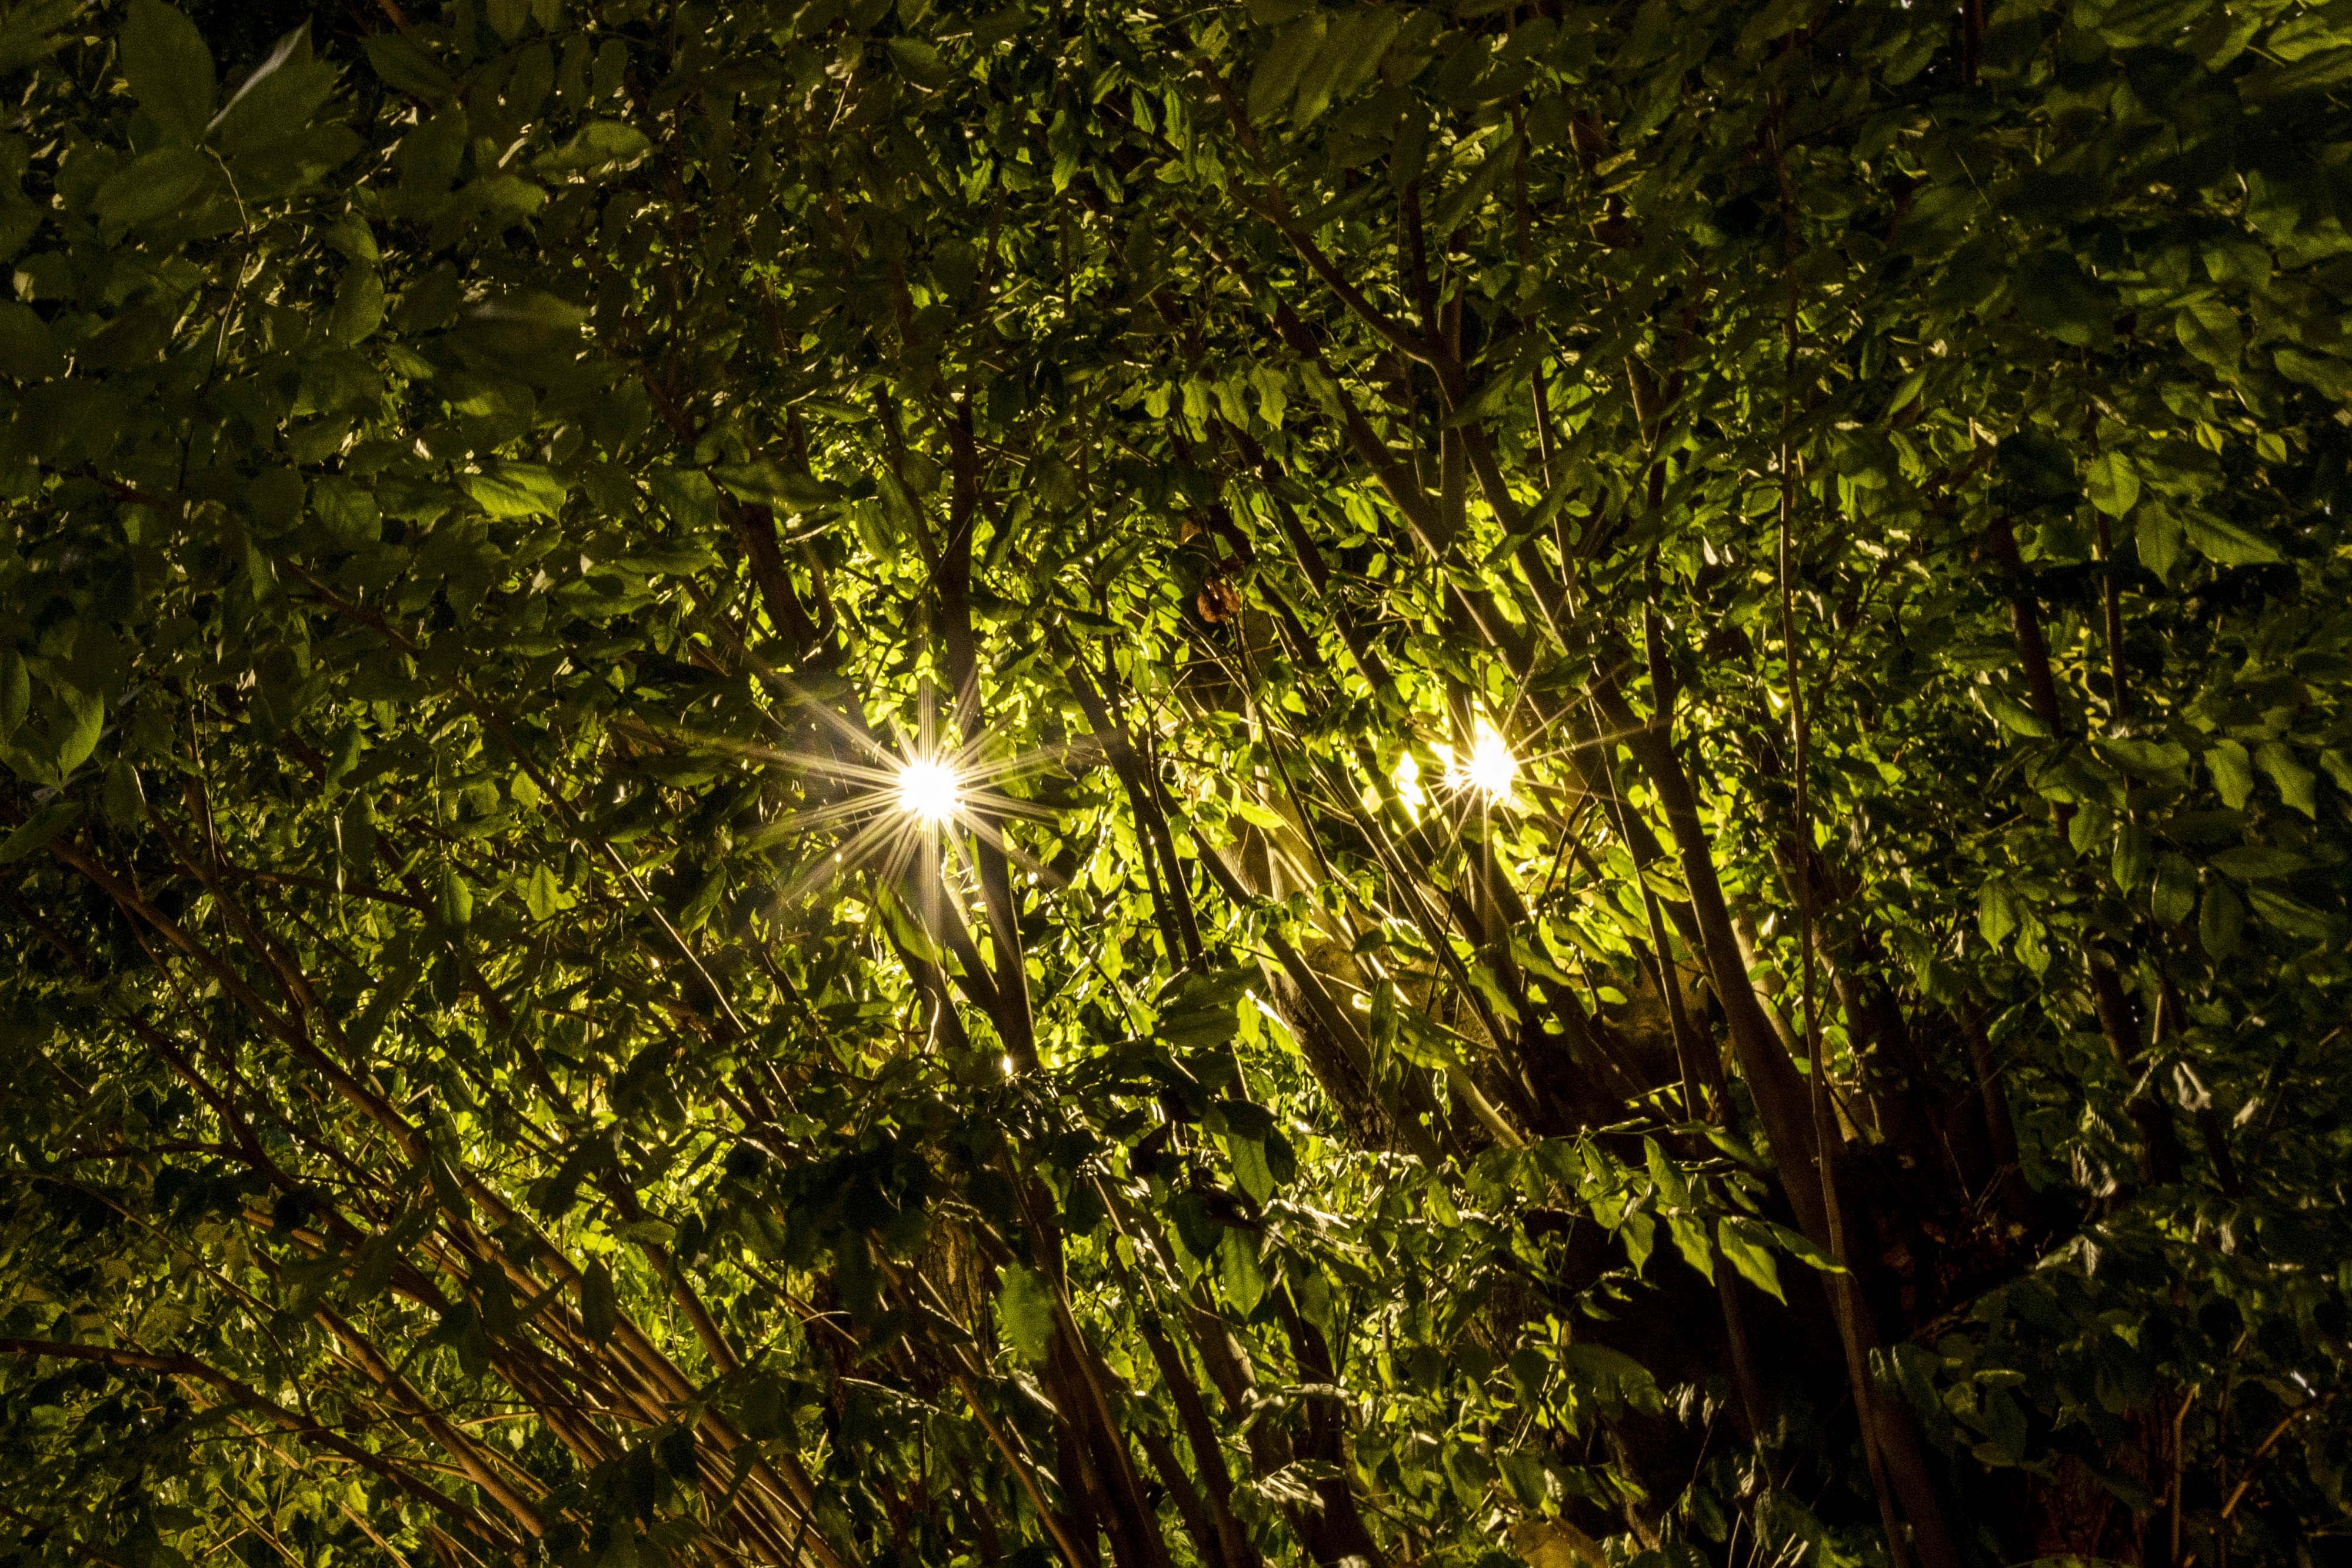 Lampu taman berada di antara ranting pohon di Taman Ismail Marzuki, Jakarta.